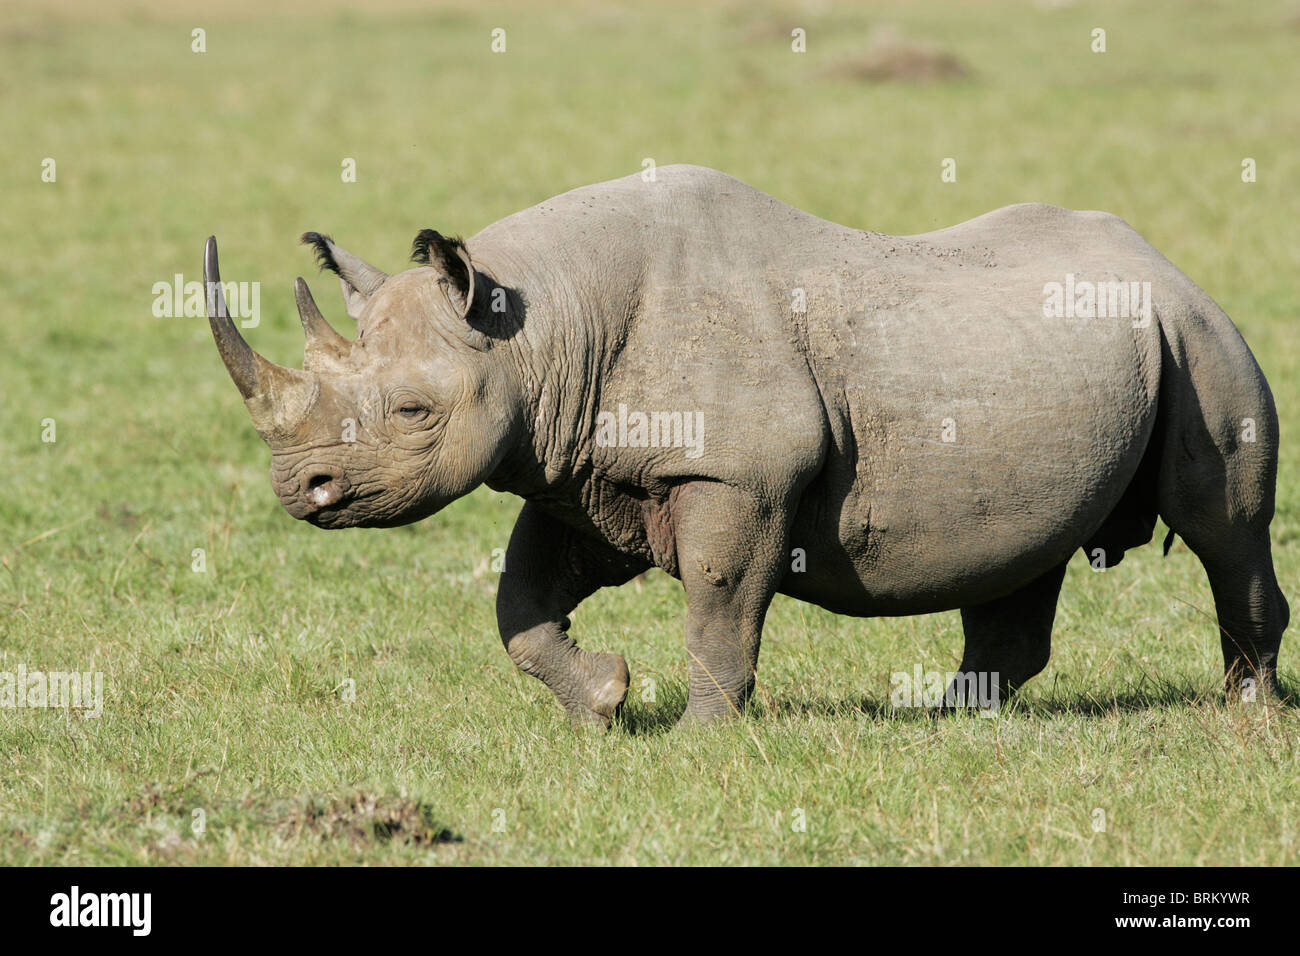 A black rhino walking on a grassy plain Stock Photo